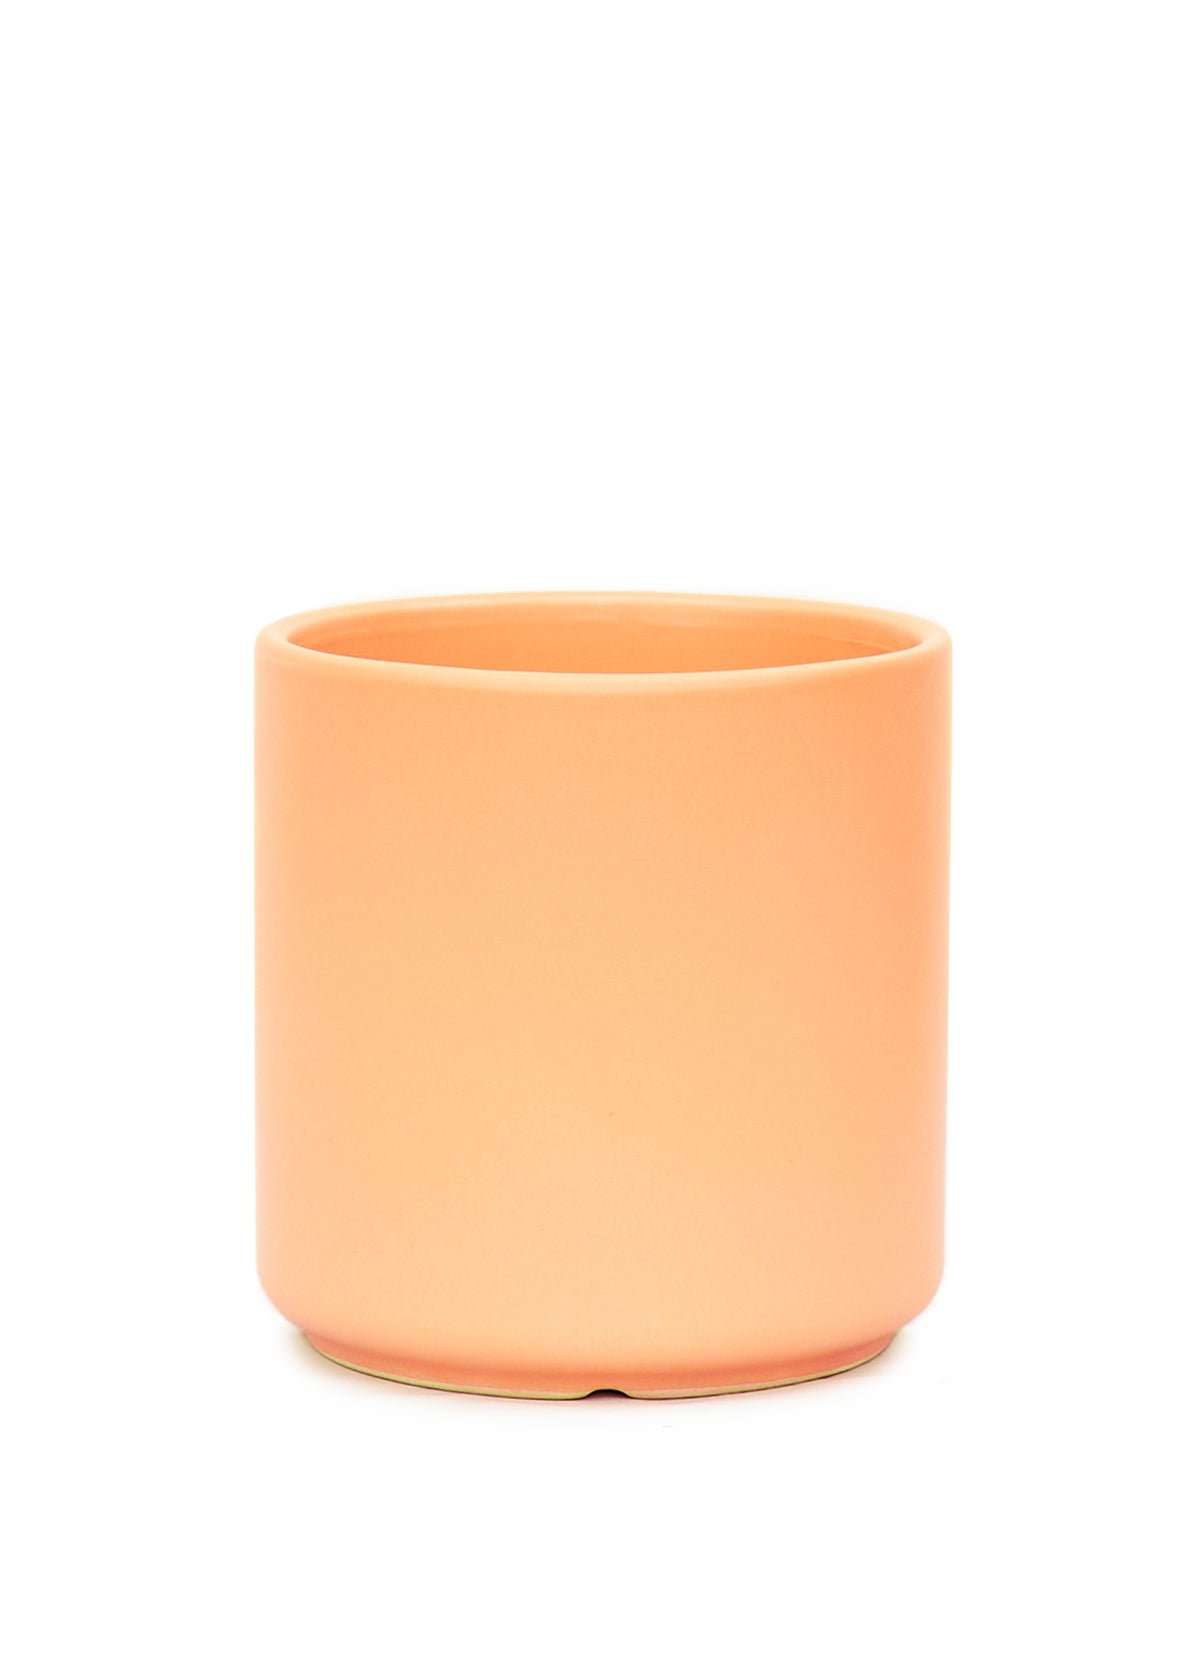 Cylindrical Ceramic Planter, Peach 7" Wide